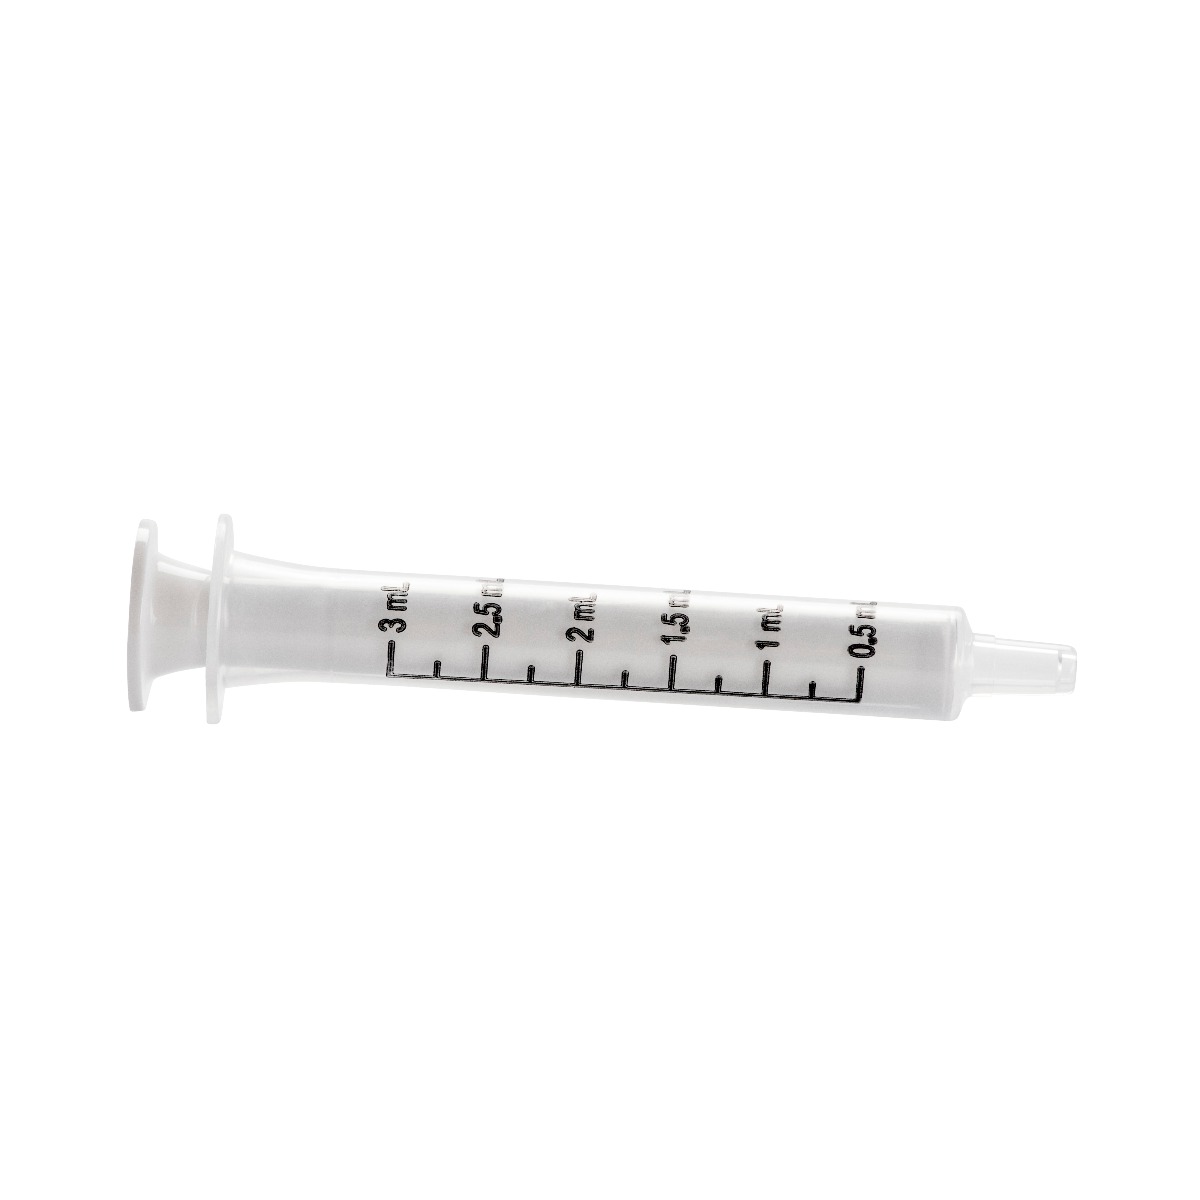 Measuring Syringe